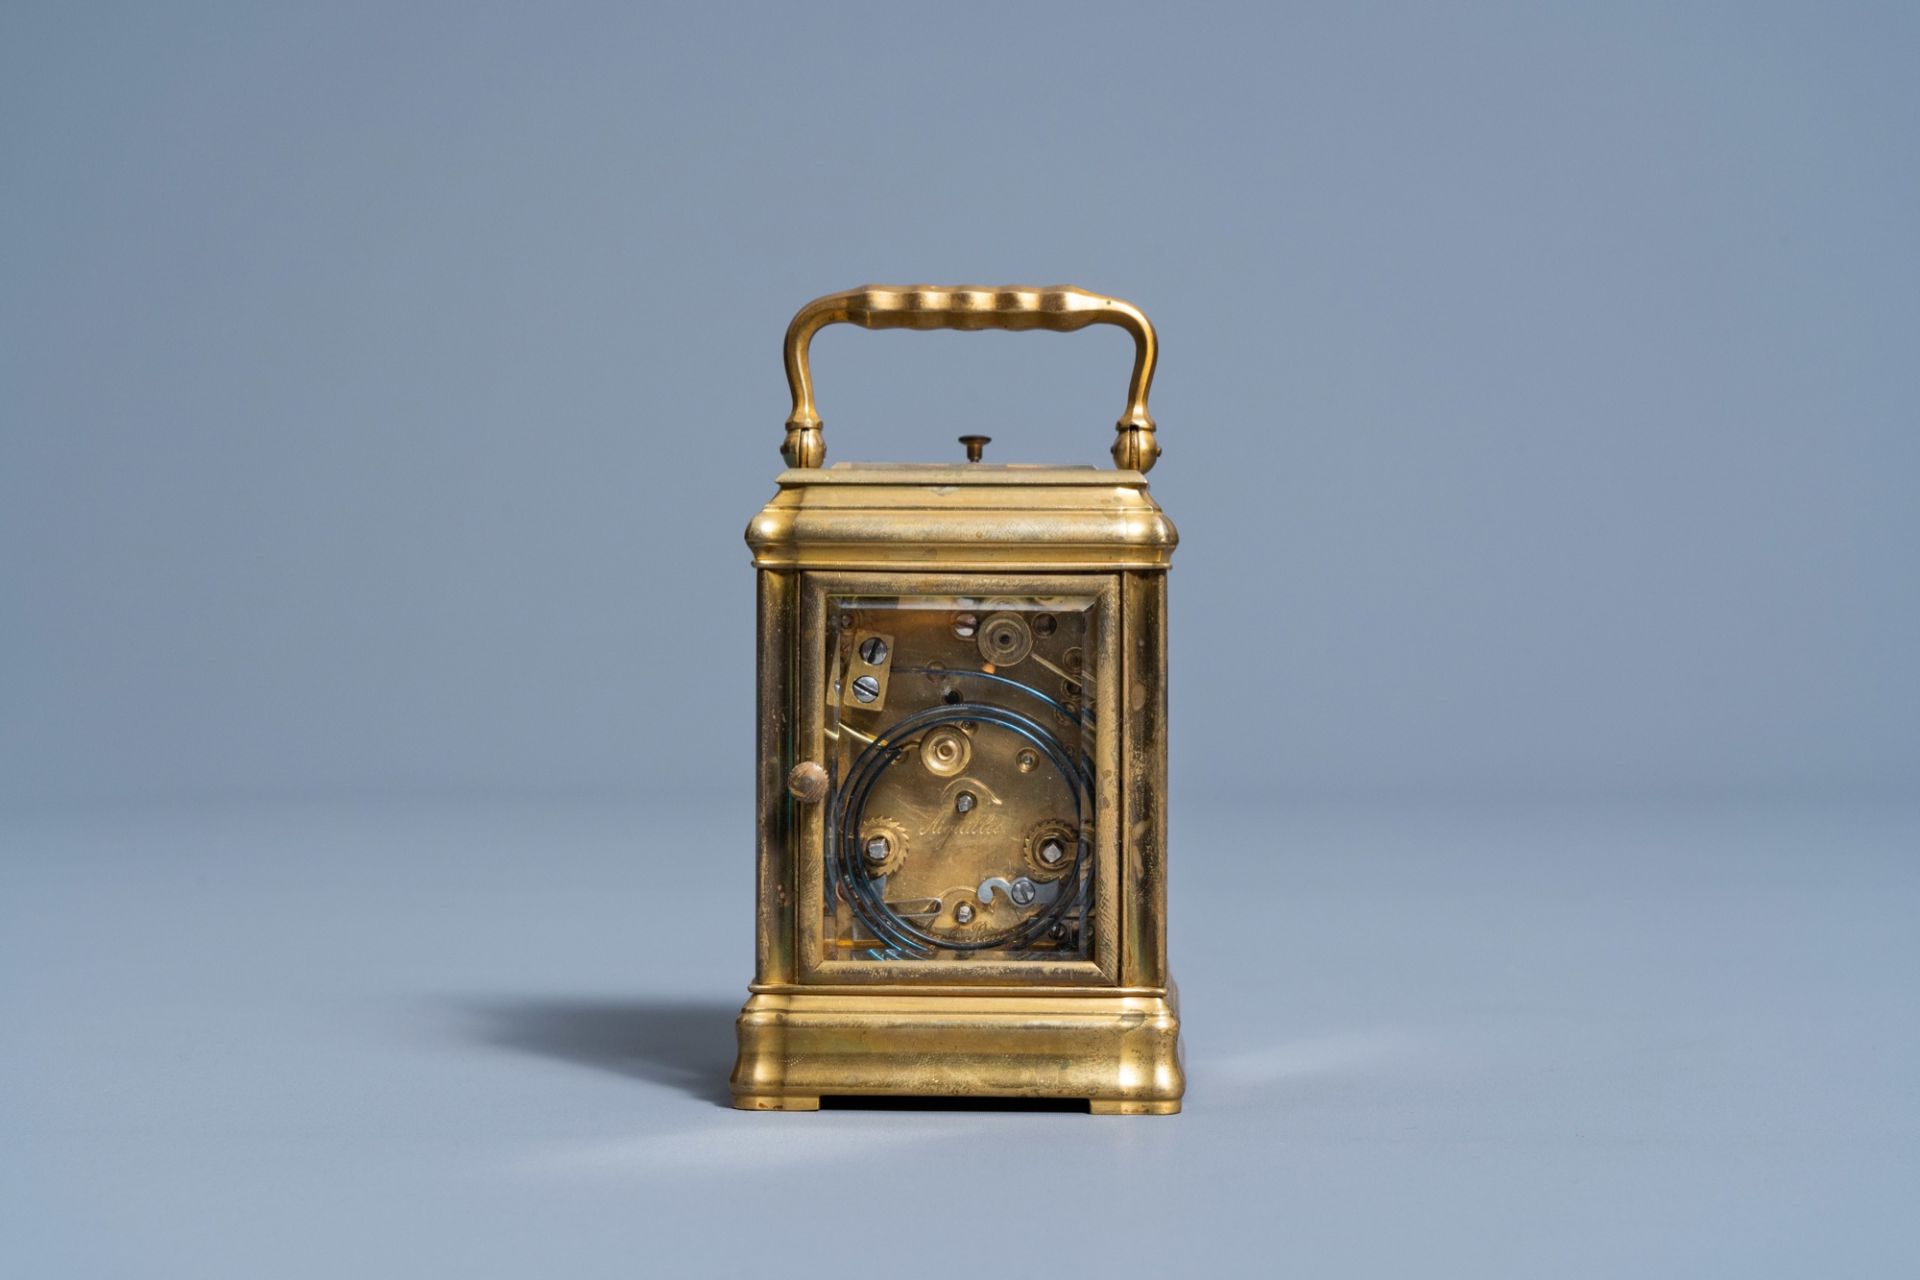 A French-Russian gilt brass Pavel Bure (Paul BuhrŽ) carriage clock, 'Margaine Paris' mark, ca. 1900 - Image 8 of 13